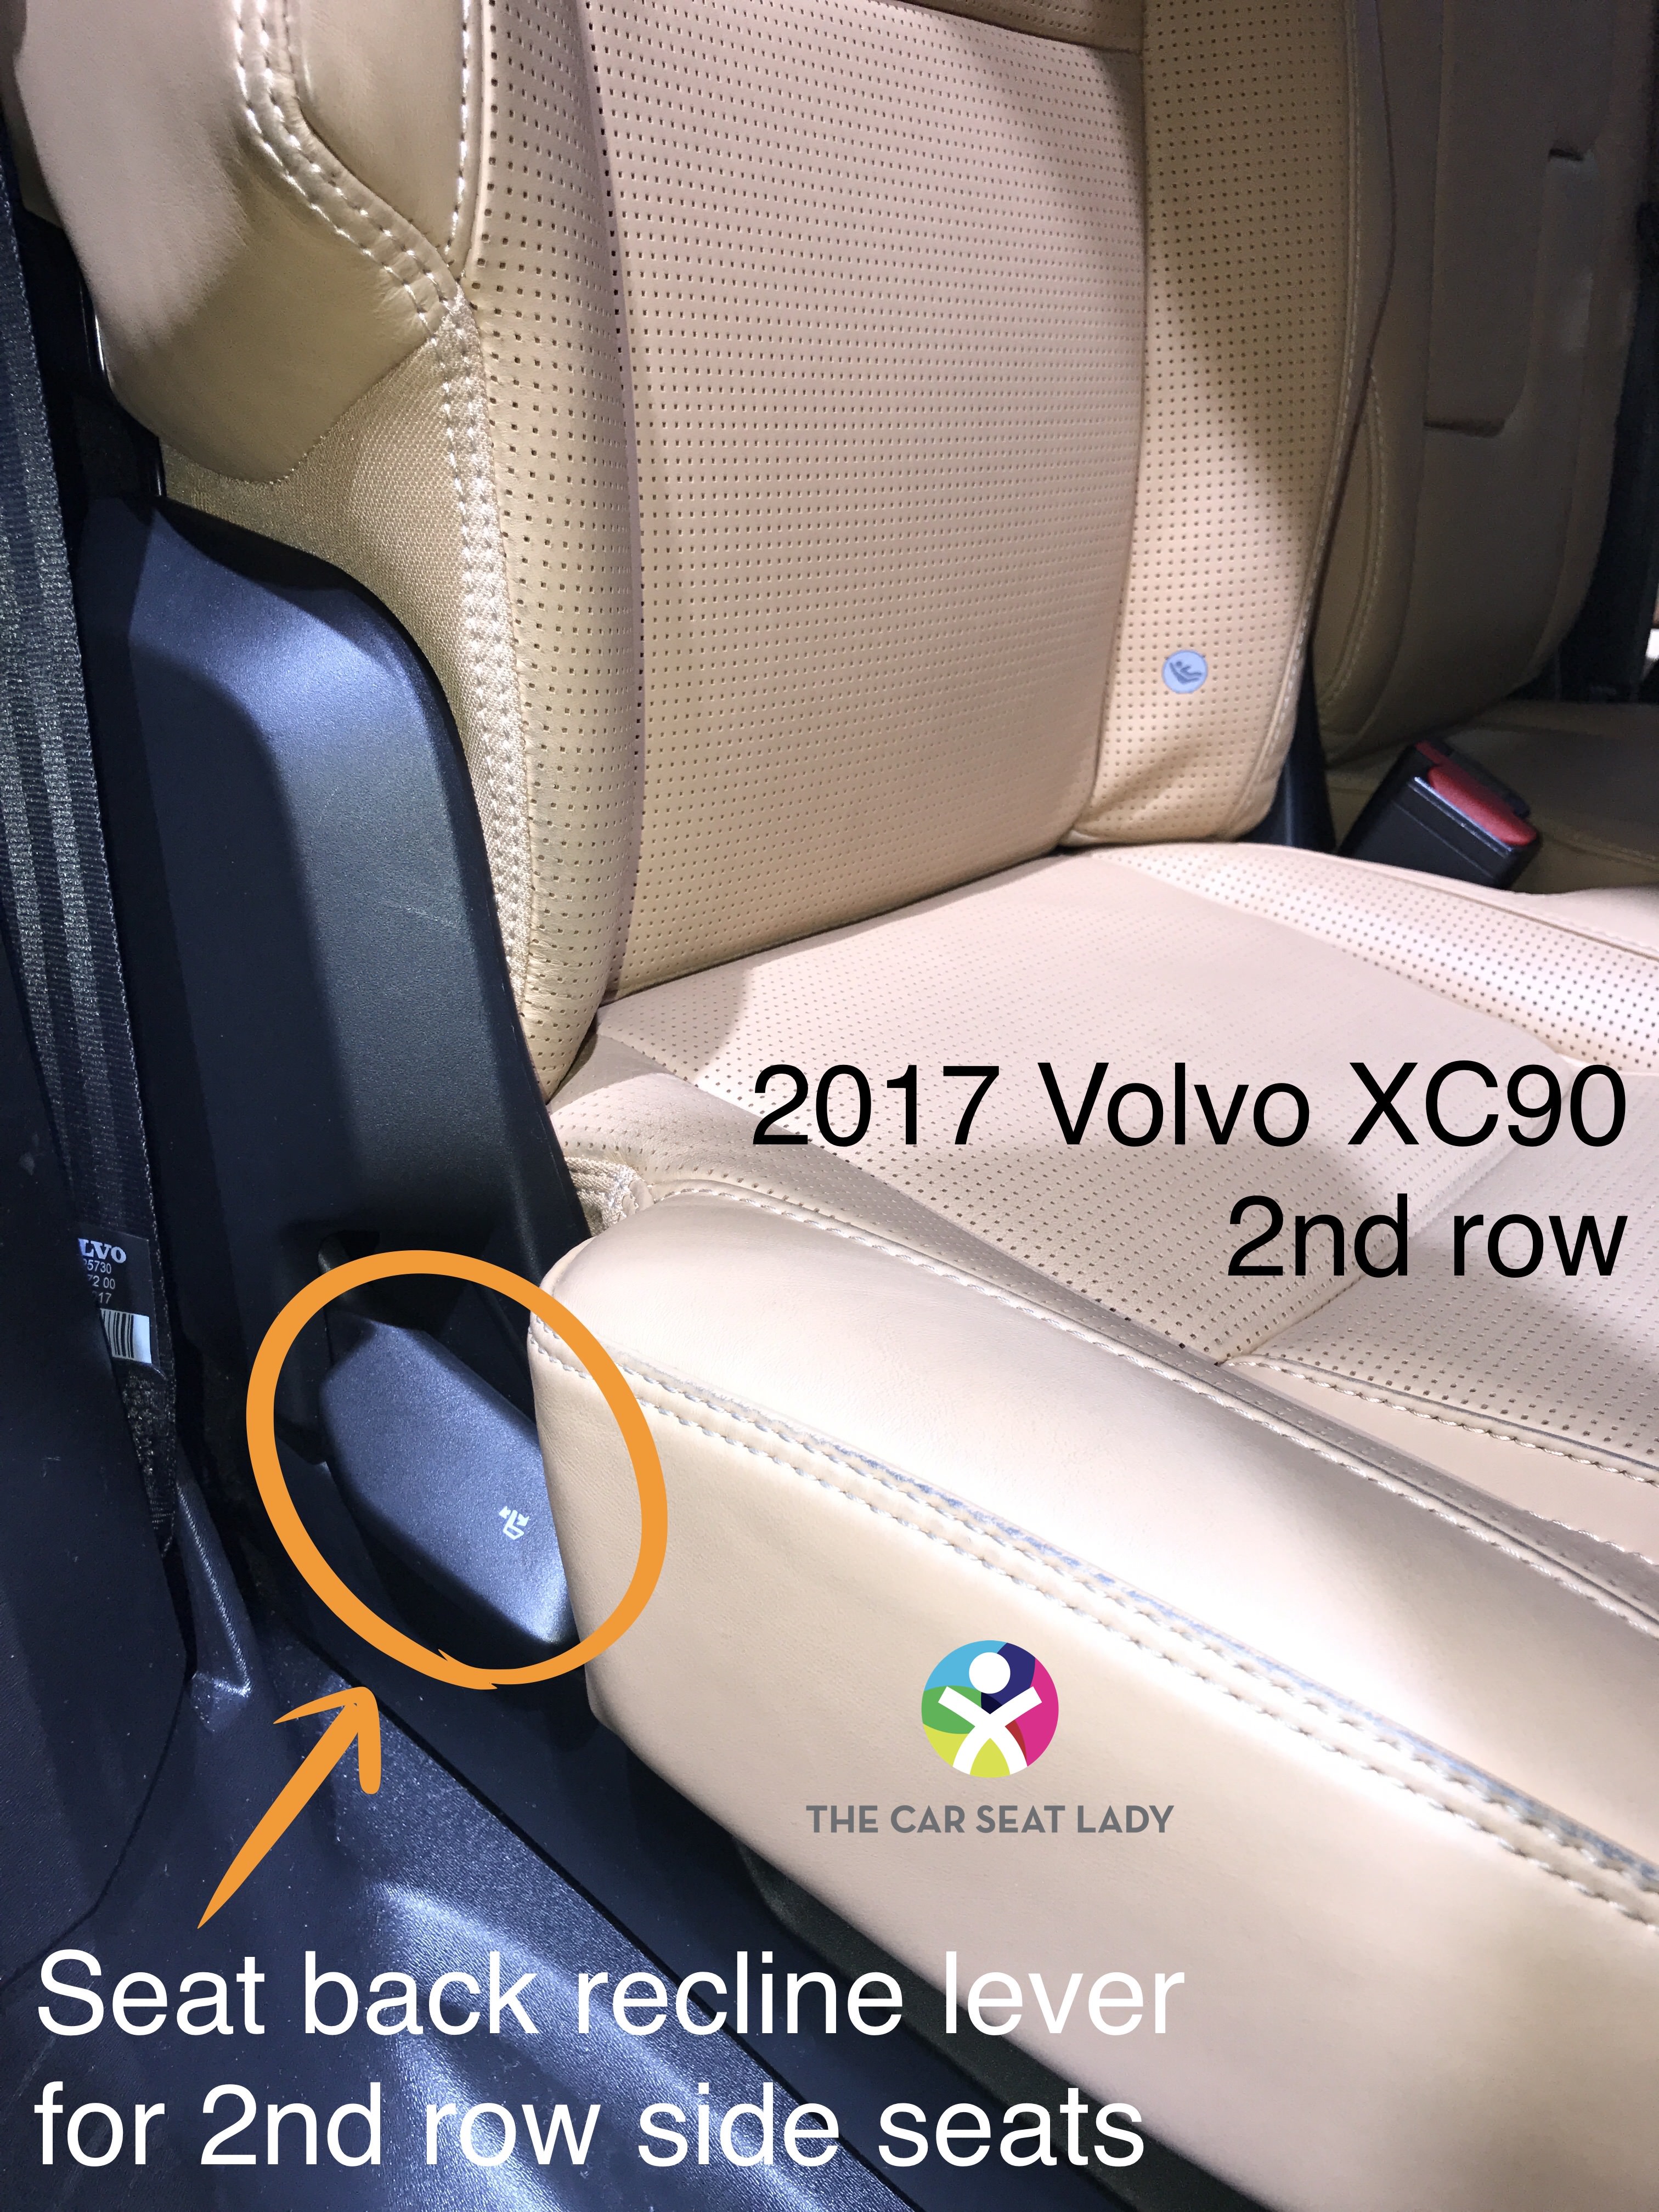 The Car Seat LadyVolvo XC90 - The Car Seat Lady